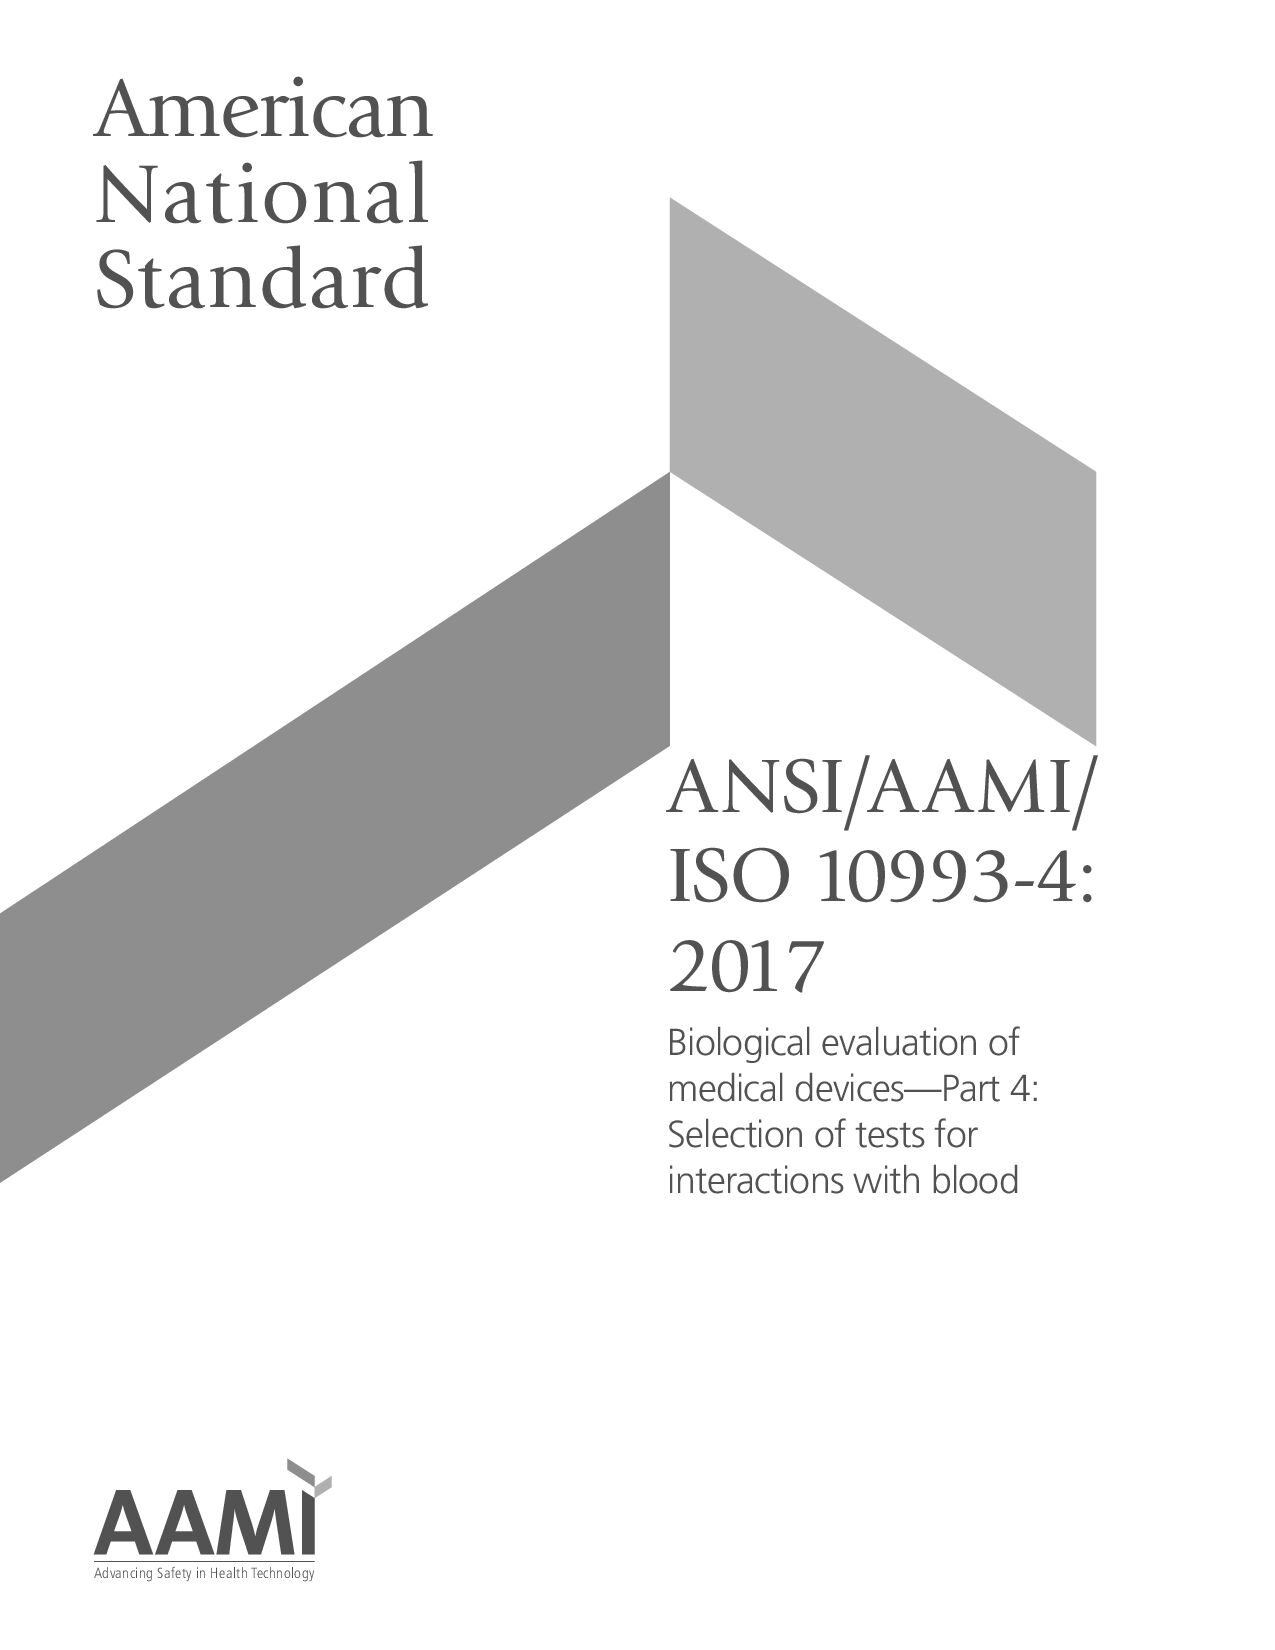 ANSI/AAMI/ISO 10993-4:2017